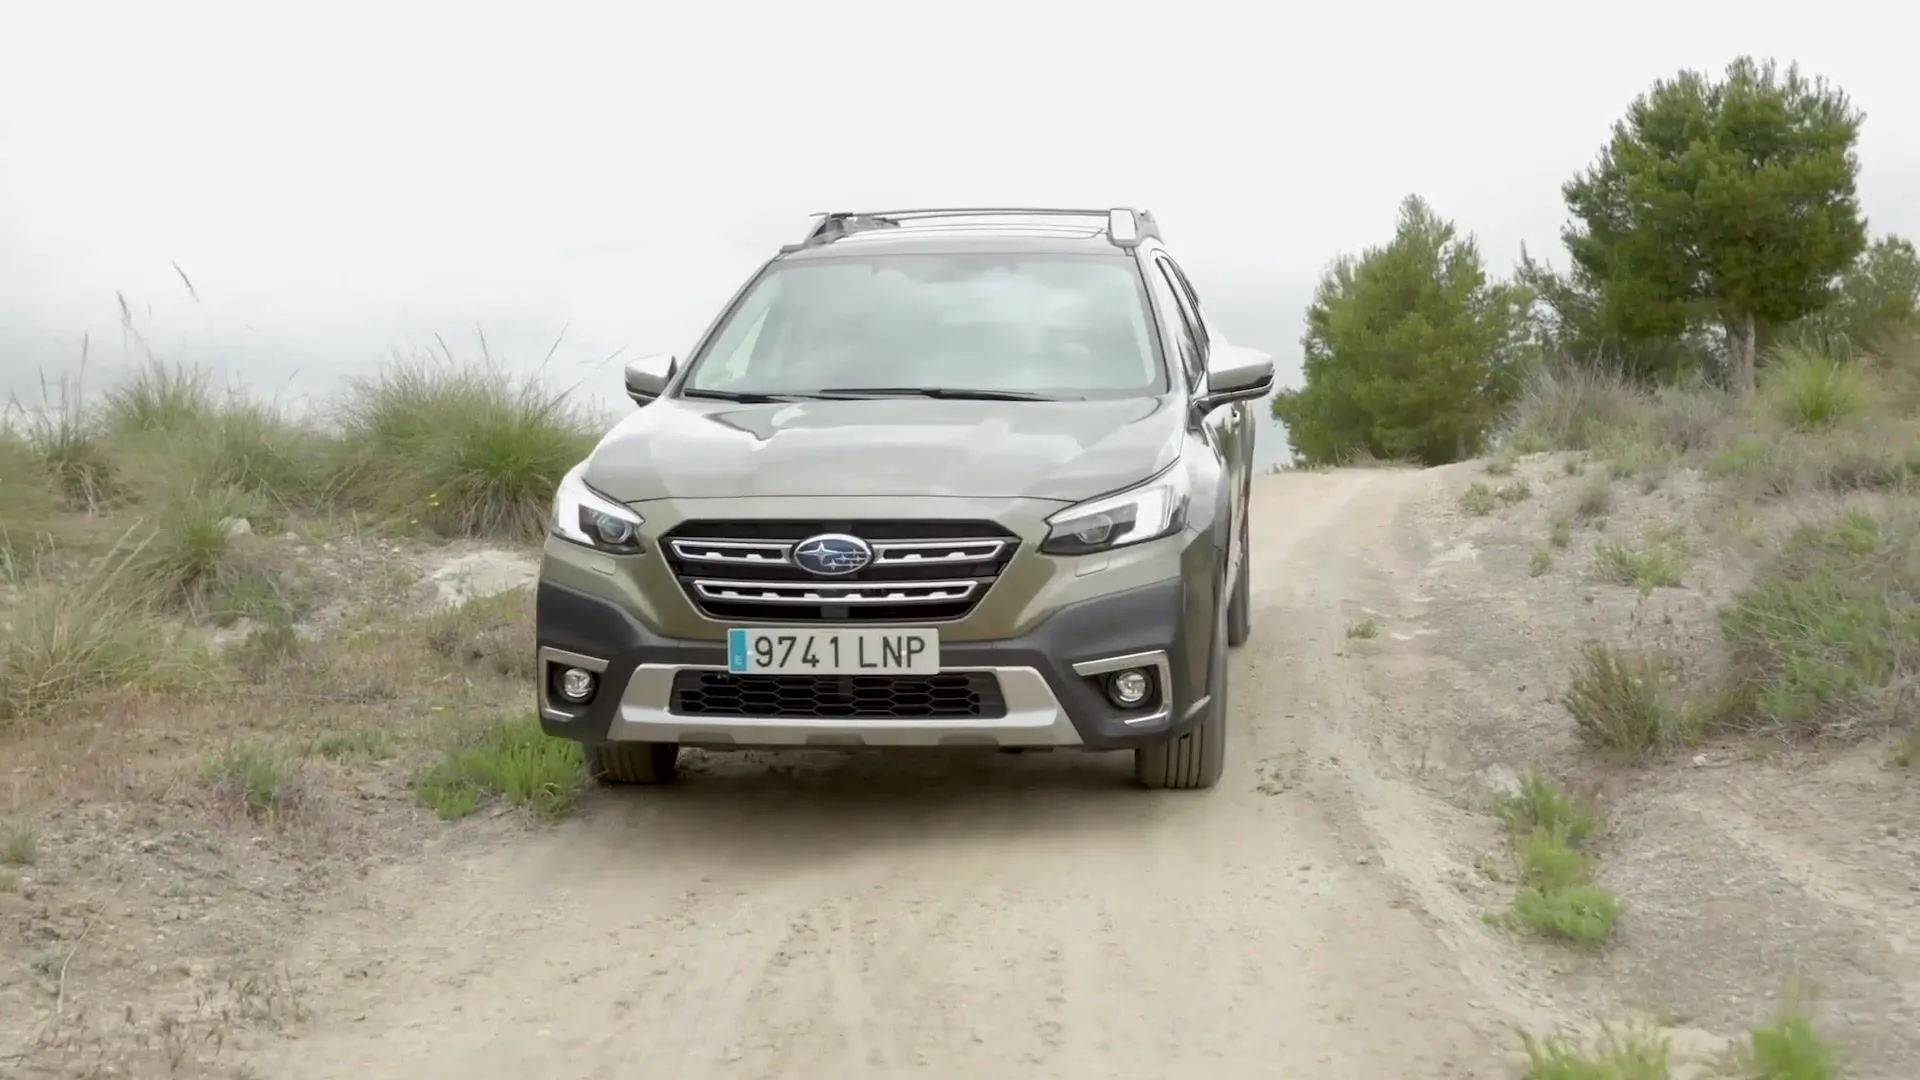 Subaru Outback rolls into new model year